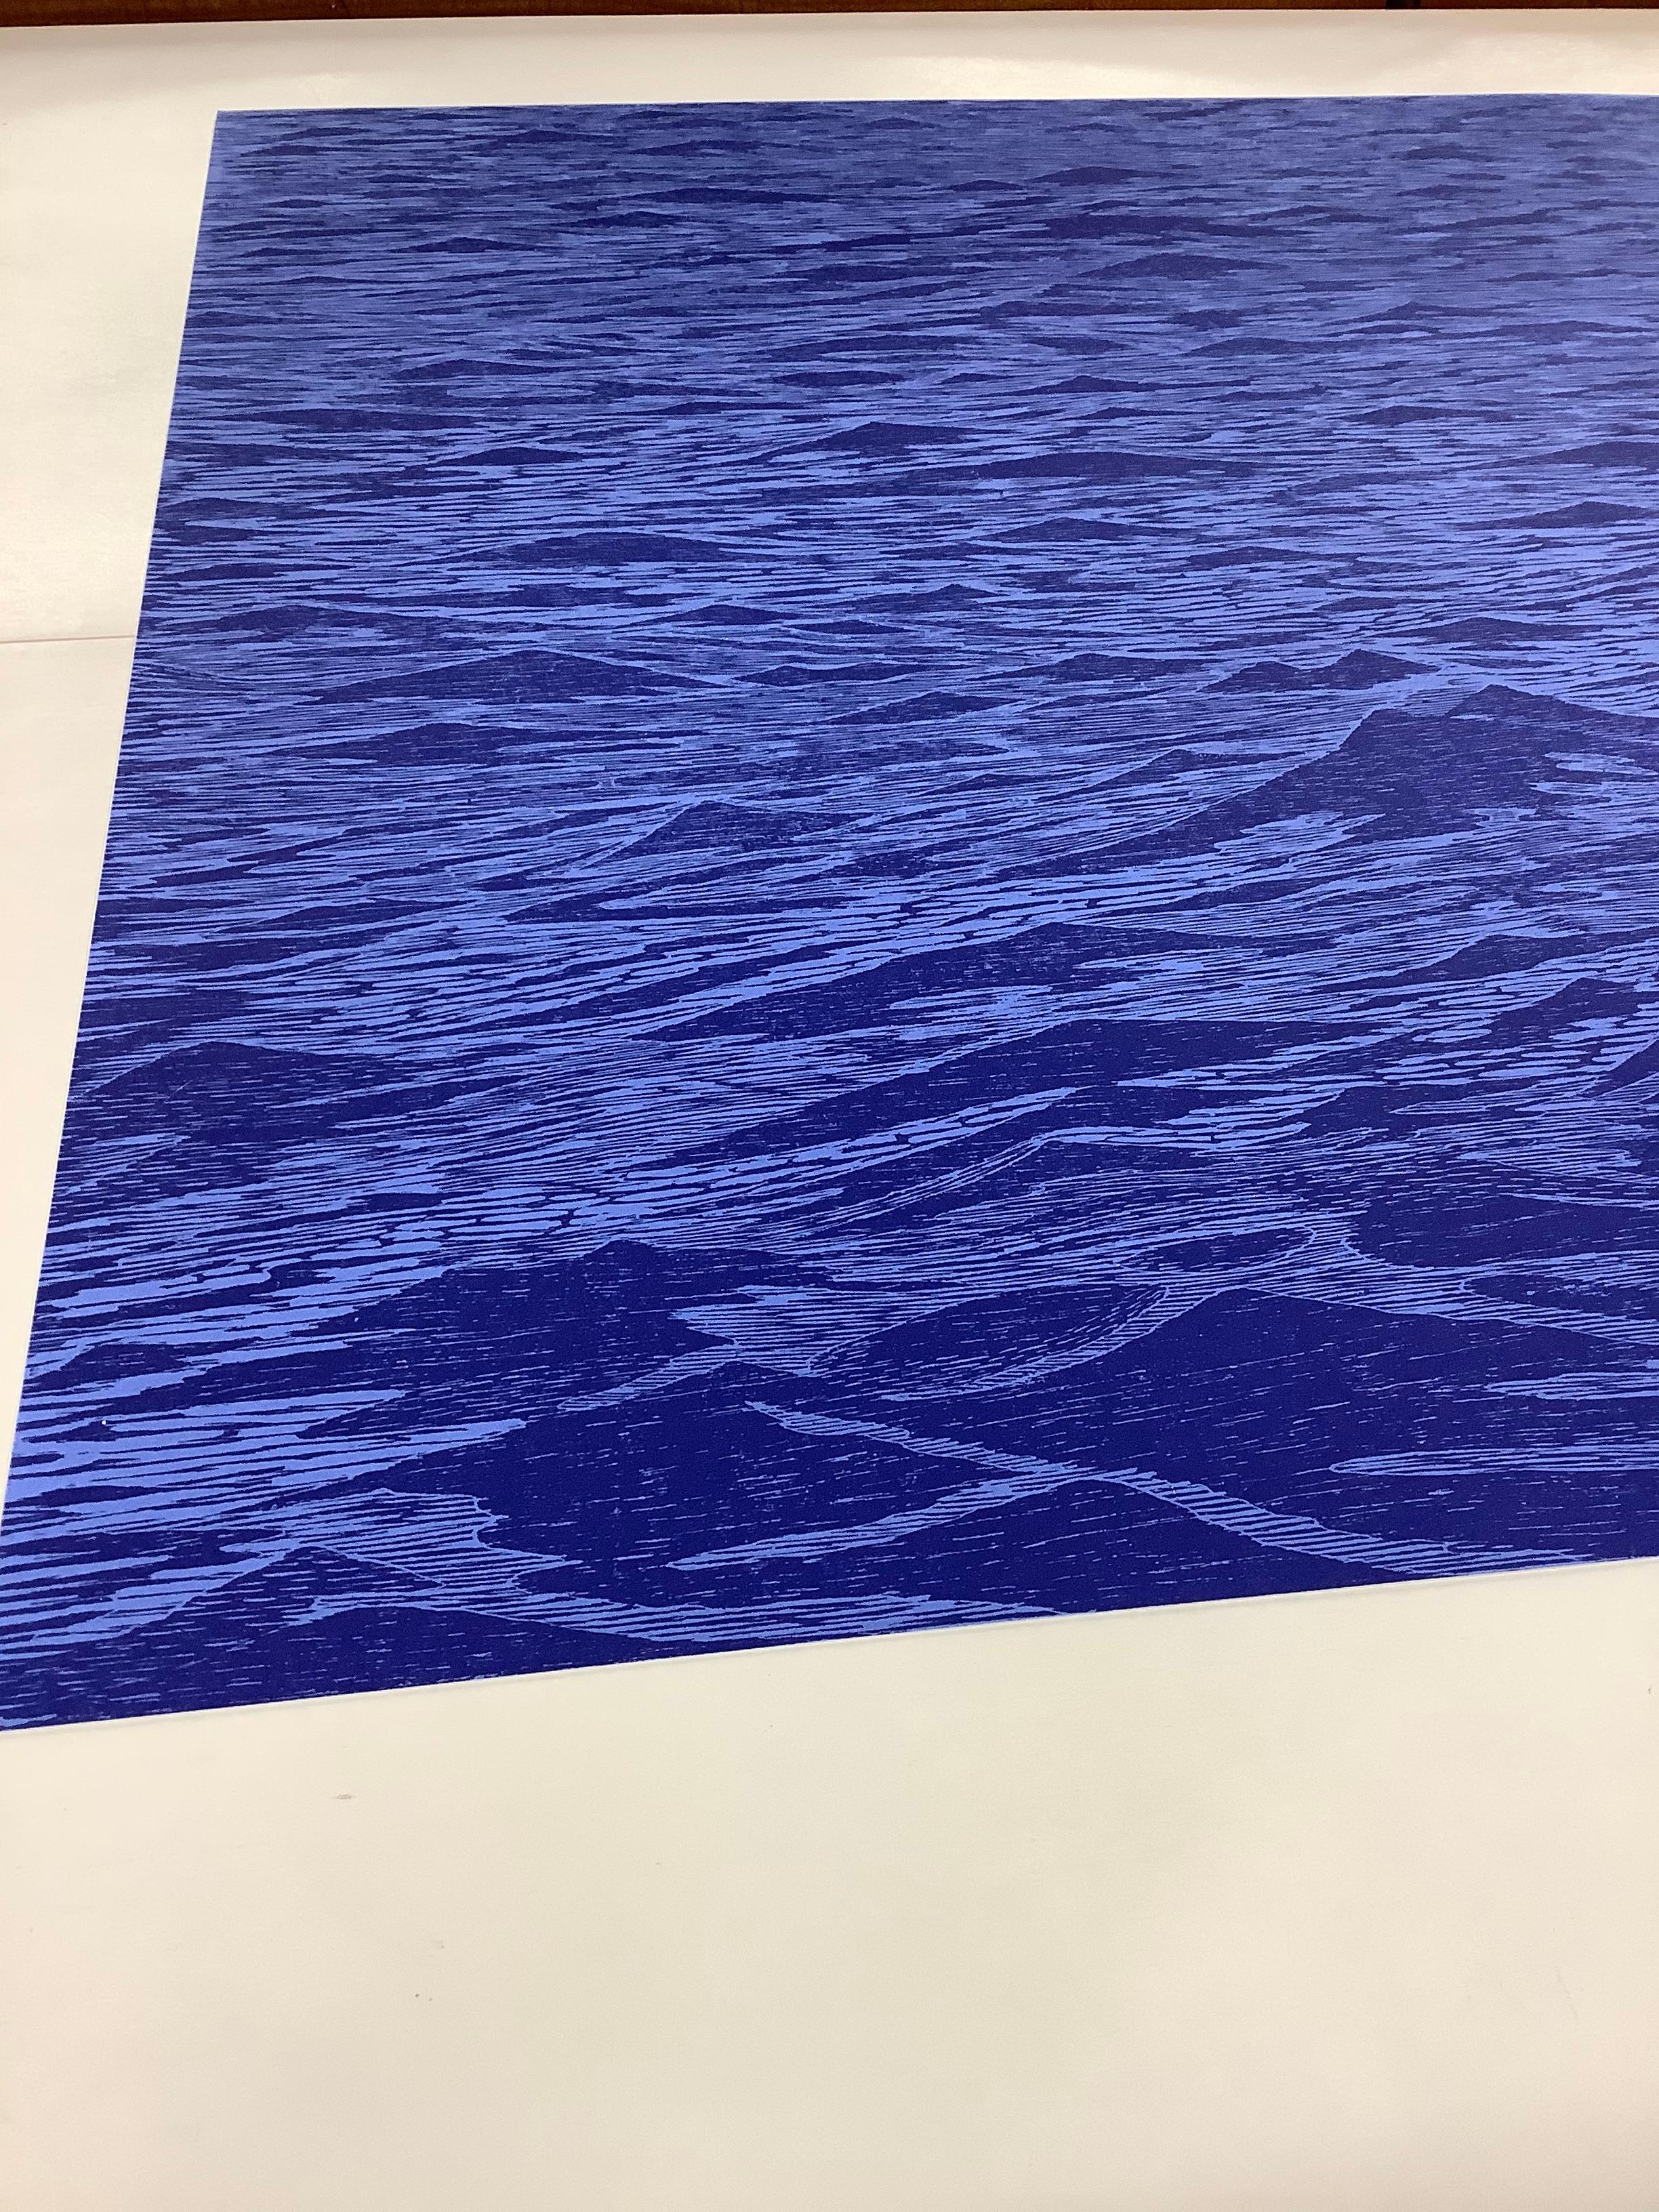 Seascape Diptych Six, Cobalt Blue Horizontal Seascape, Waves Woodcut Print   For Sale 8